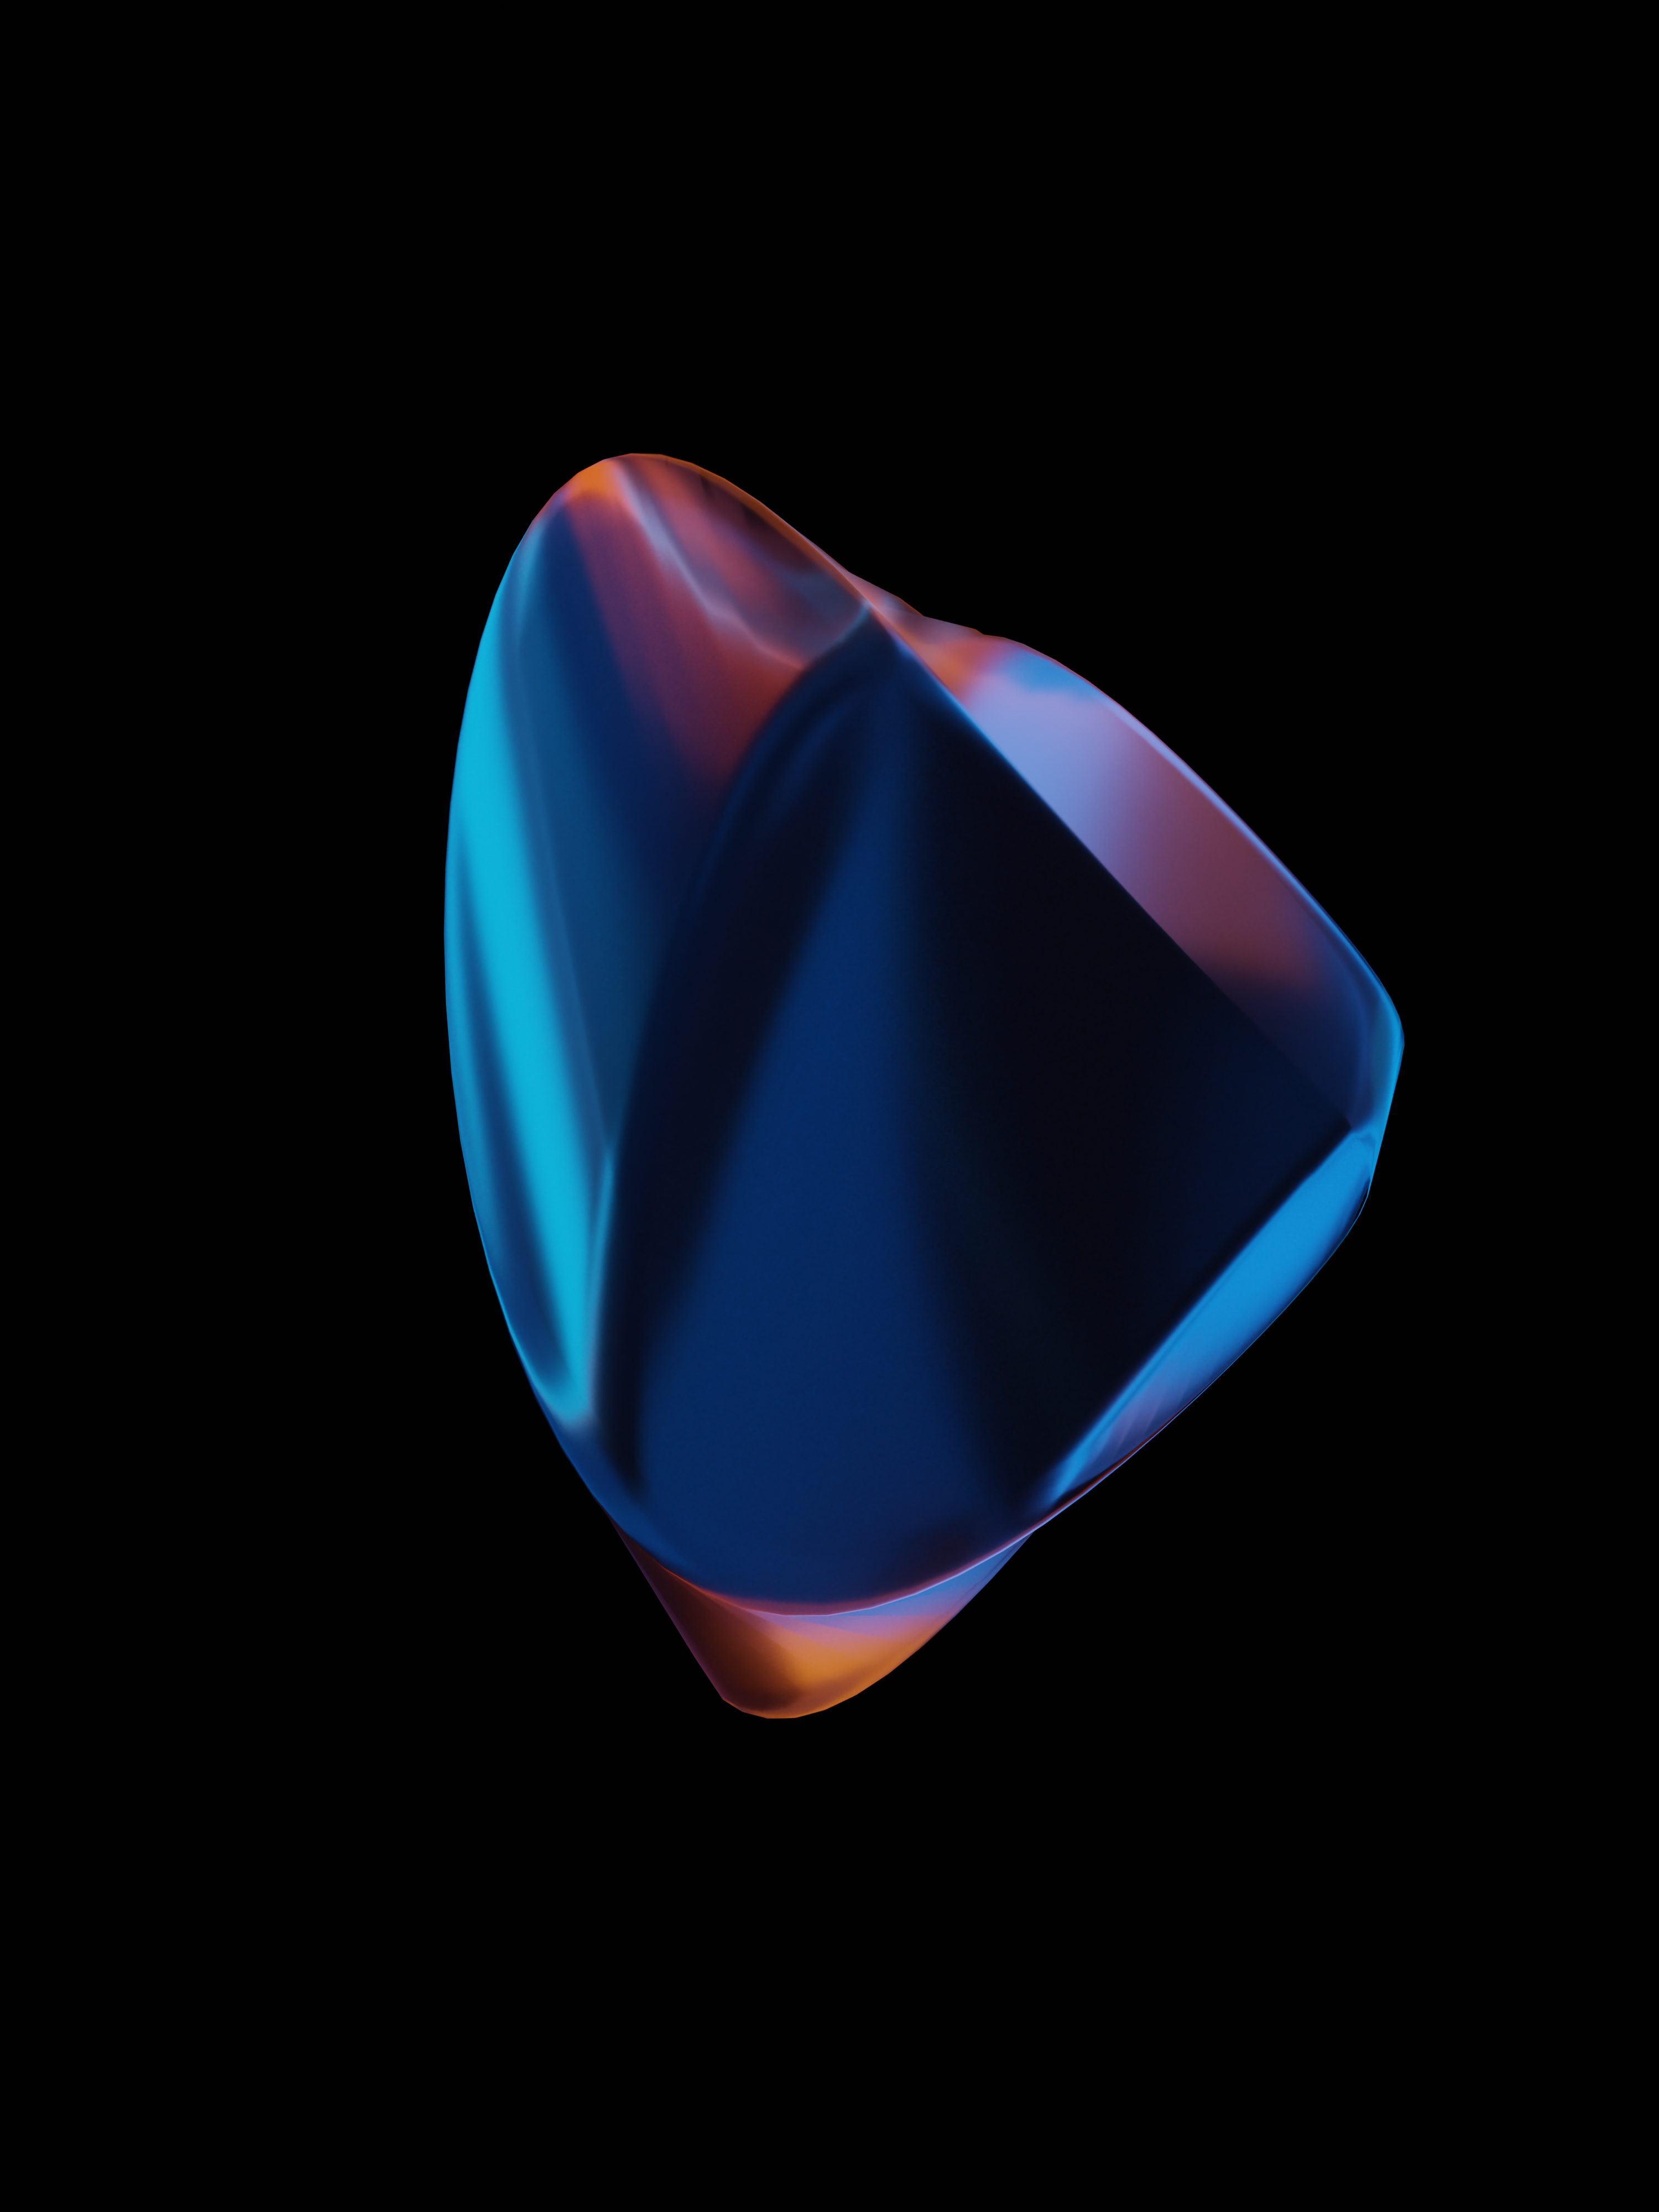 Smooth crystal, 2021. Digital art made with Blender.